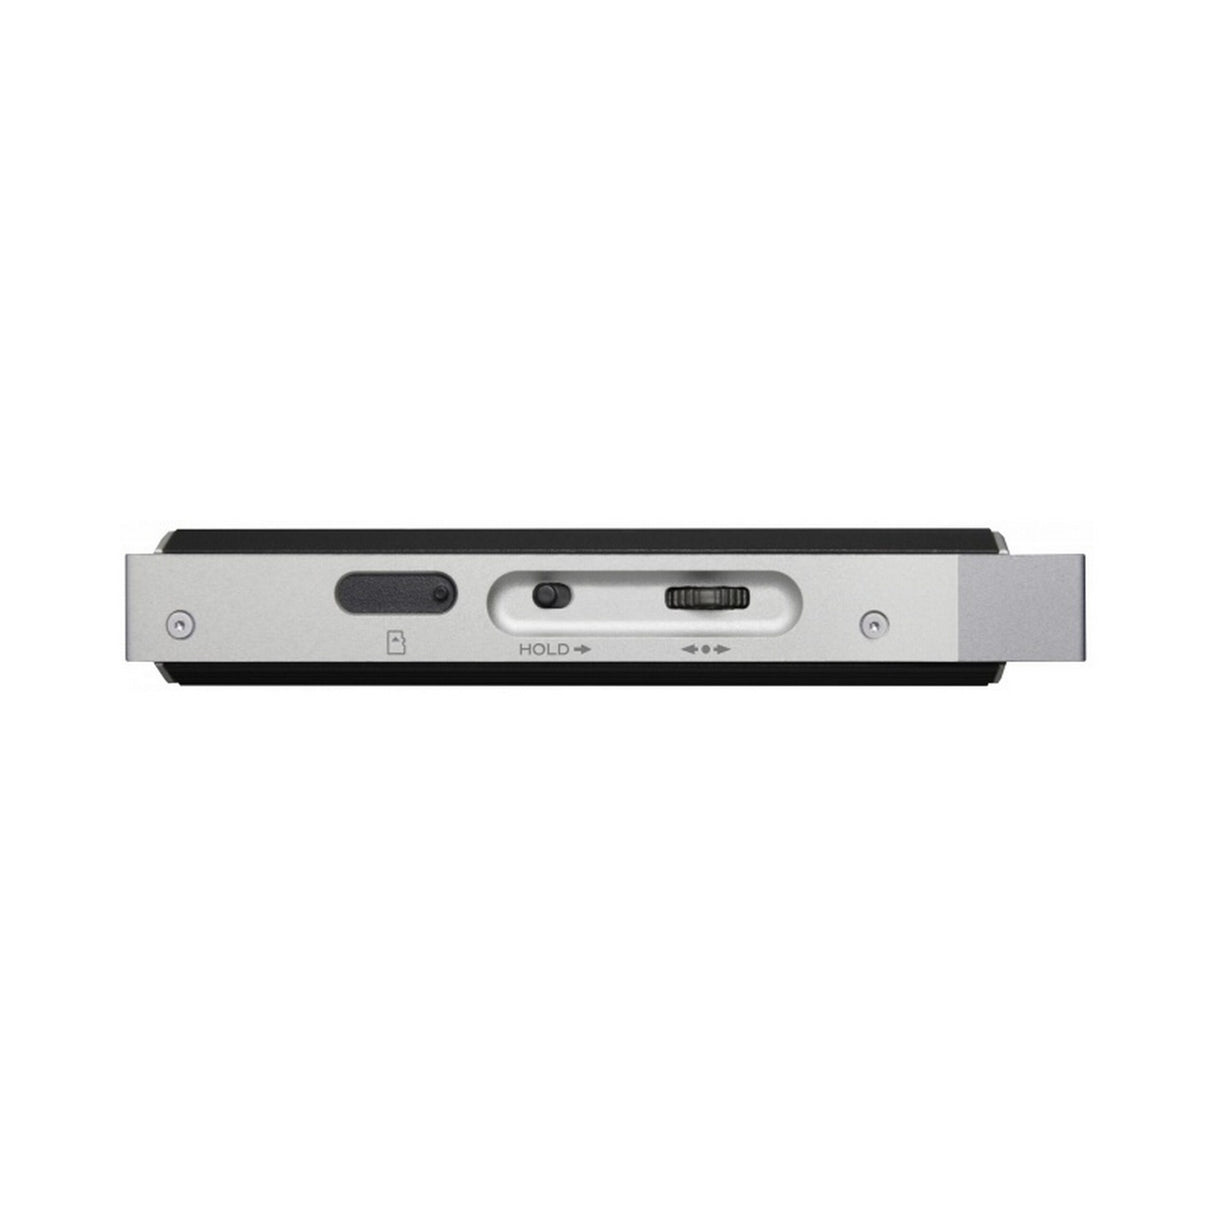 Teac HA-P90SD-B Portable Headphone Amplifier/Digital Audio Player, Black